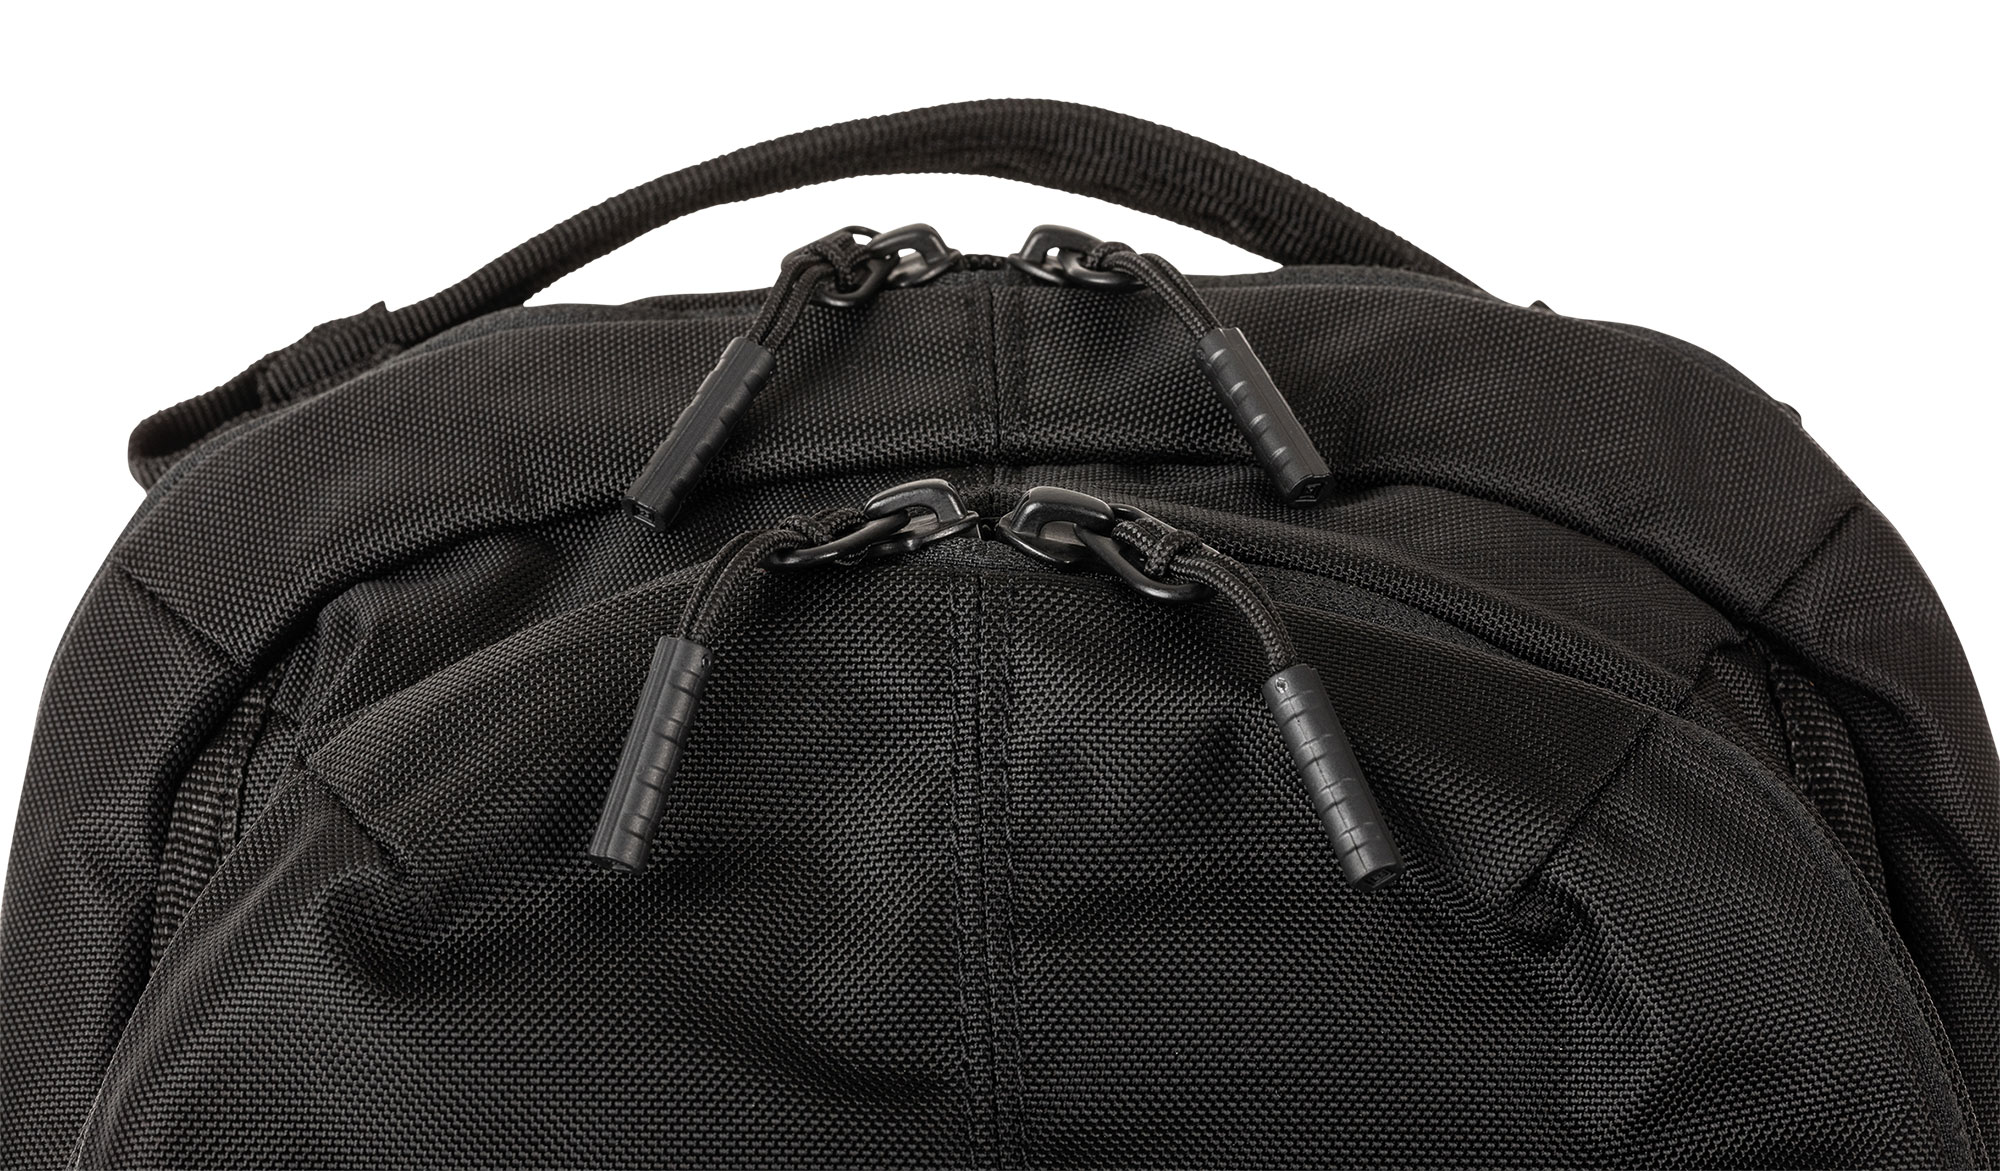 5.11 tactical lv18 backpack 2.0 30l